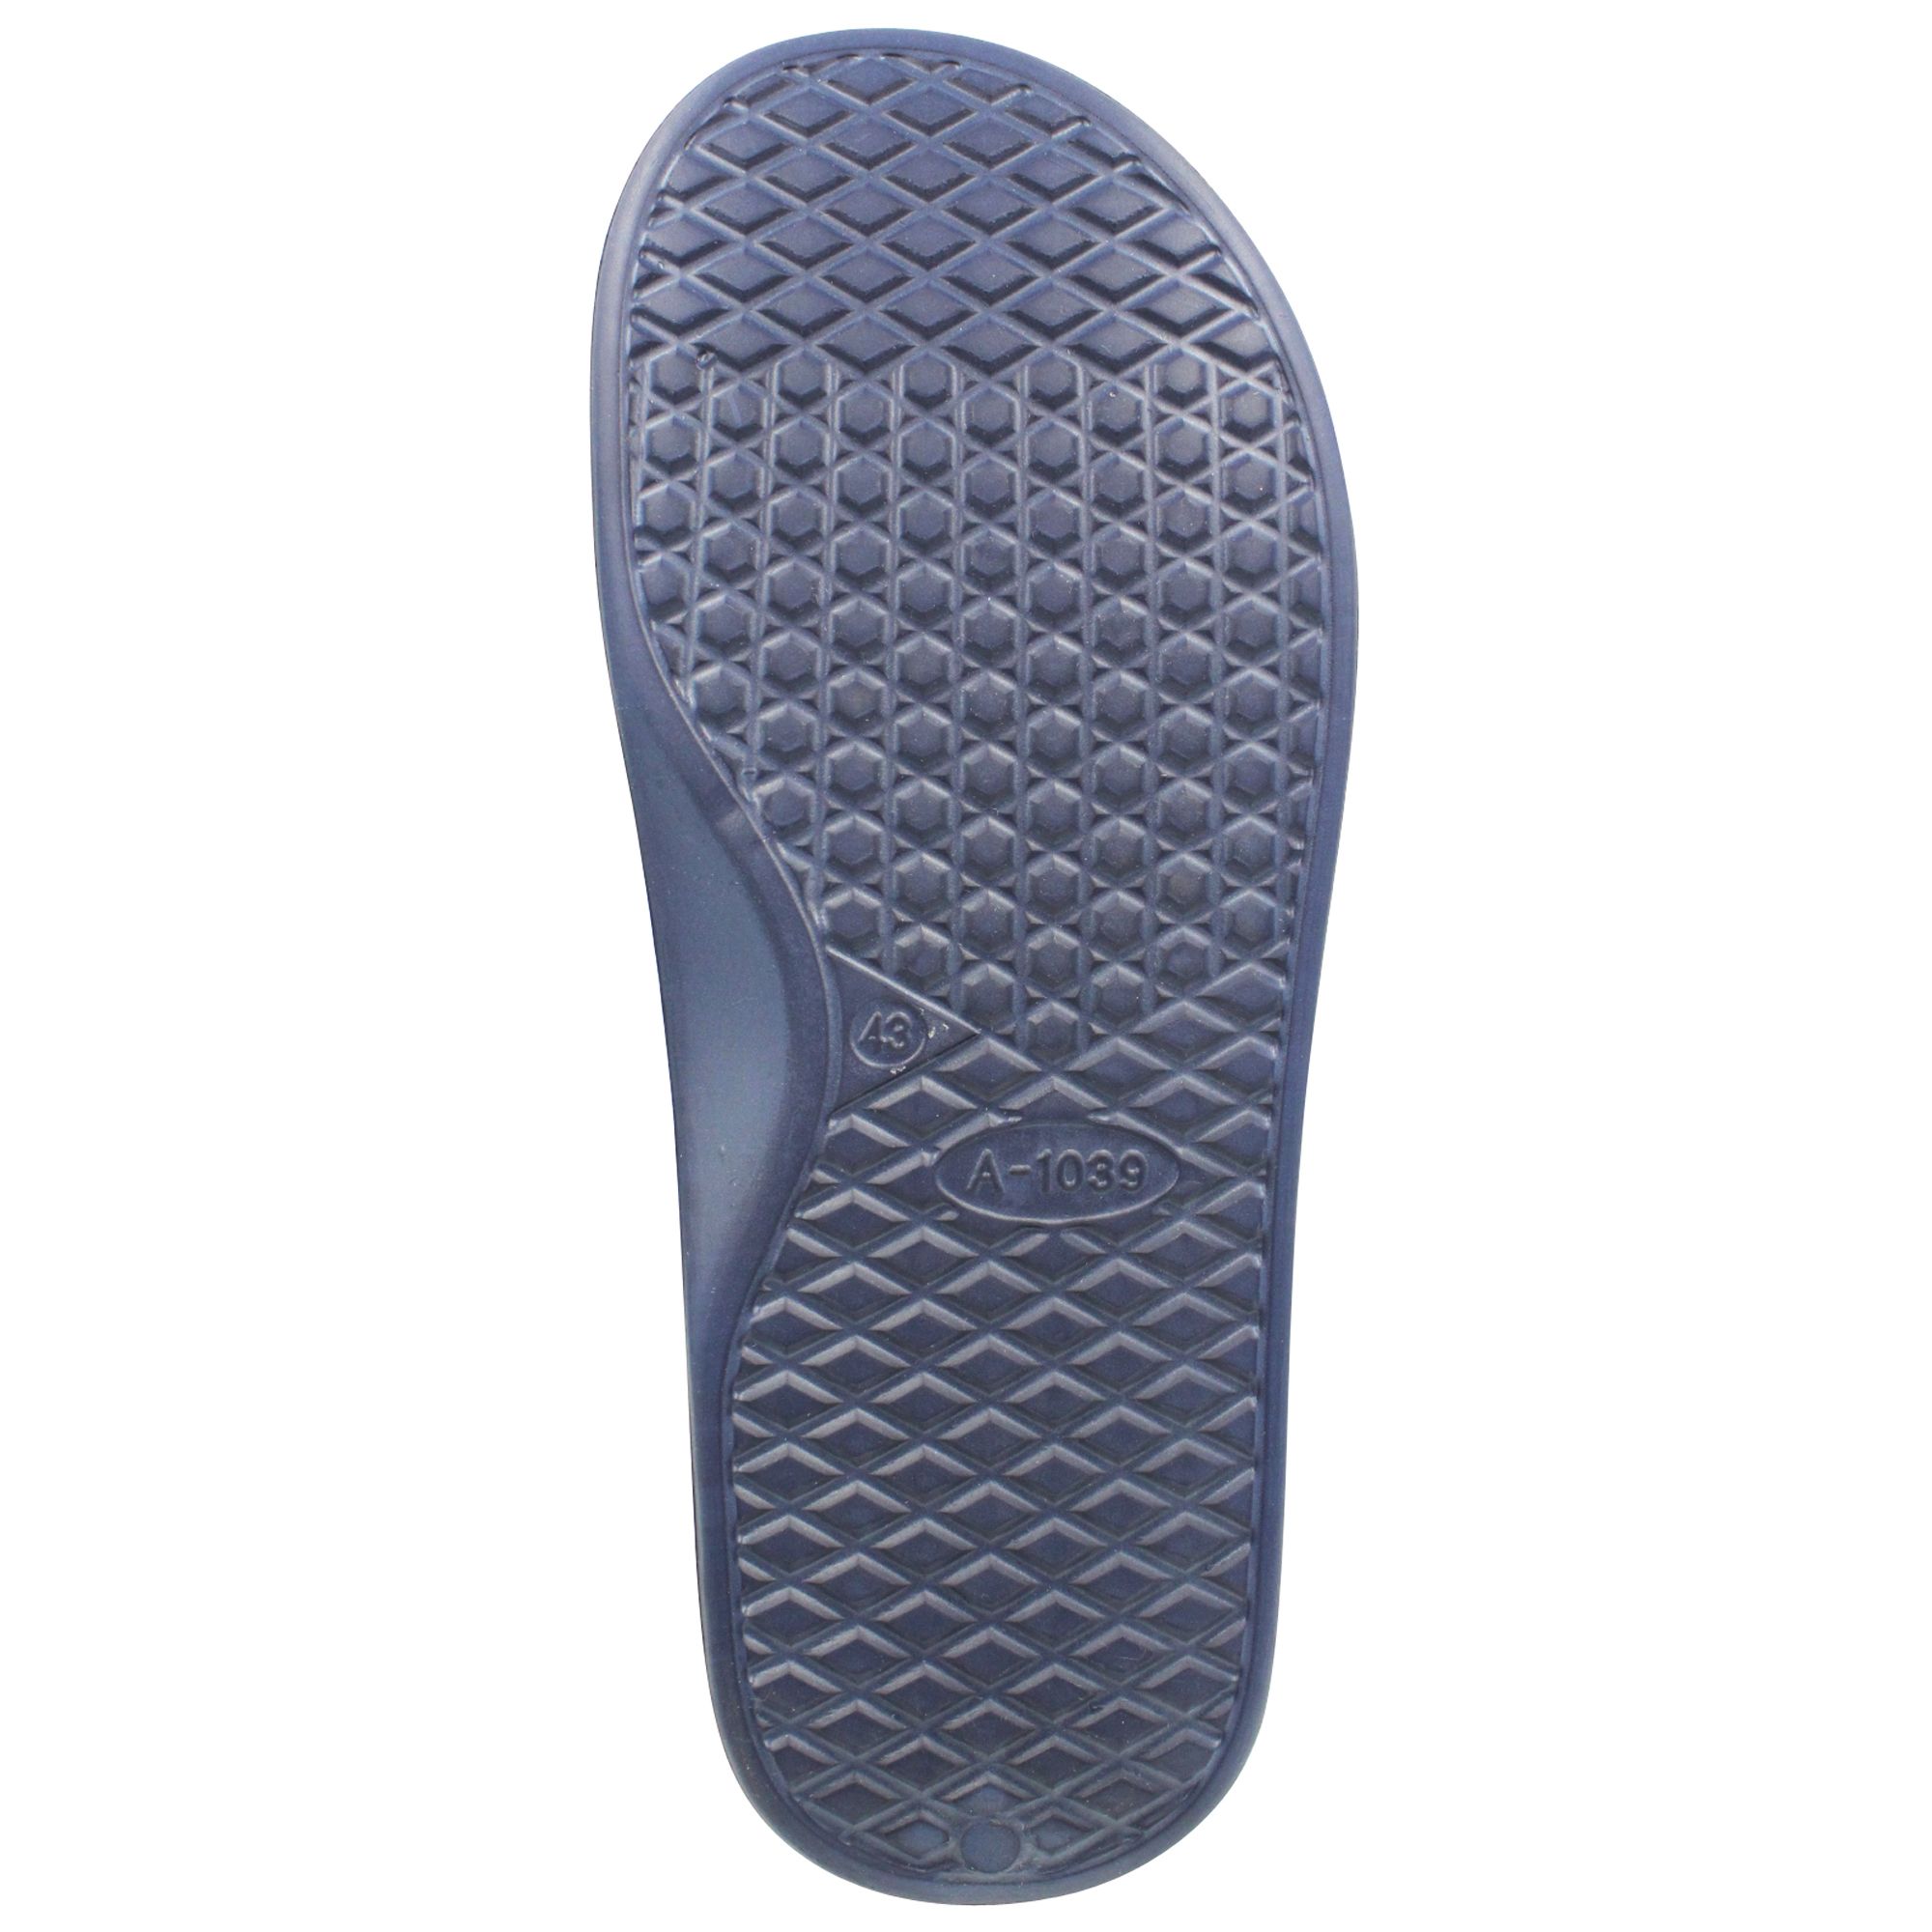 Men's Cushioned Slide Shower Slip On Shoes Casual Poolside Sandals | eBay